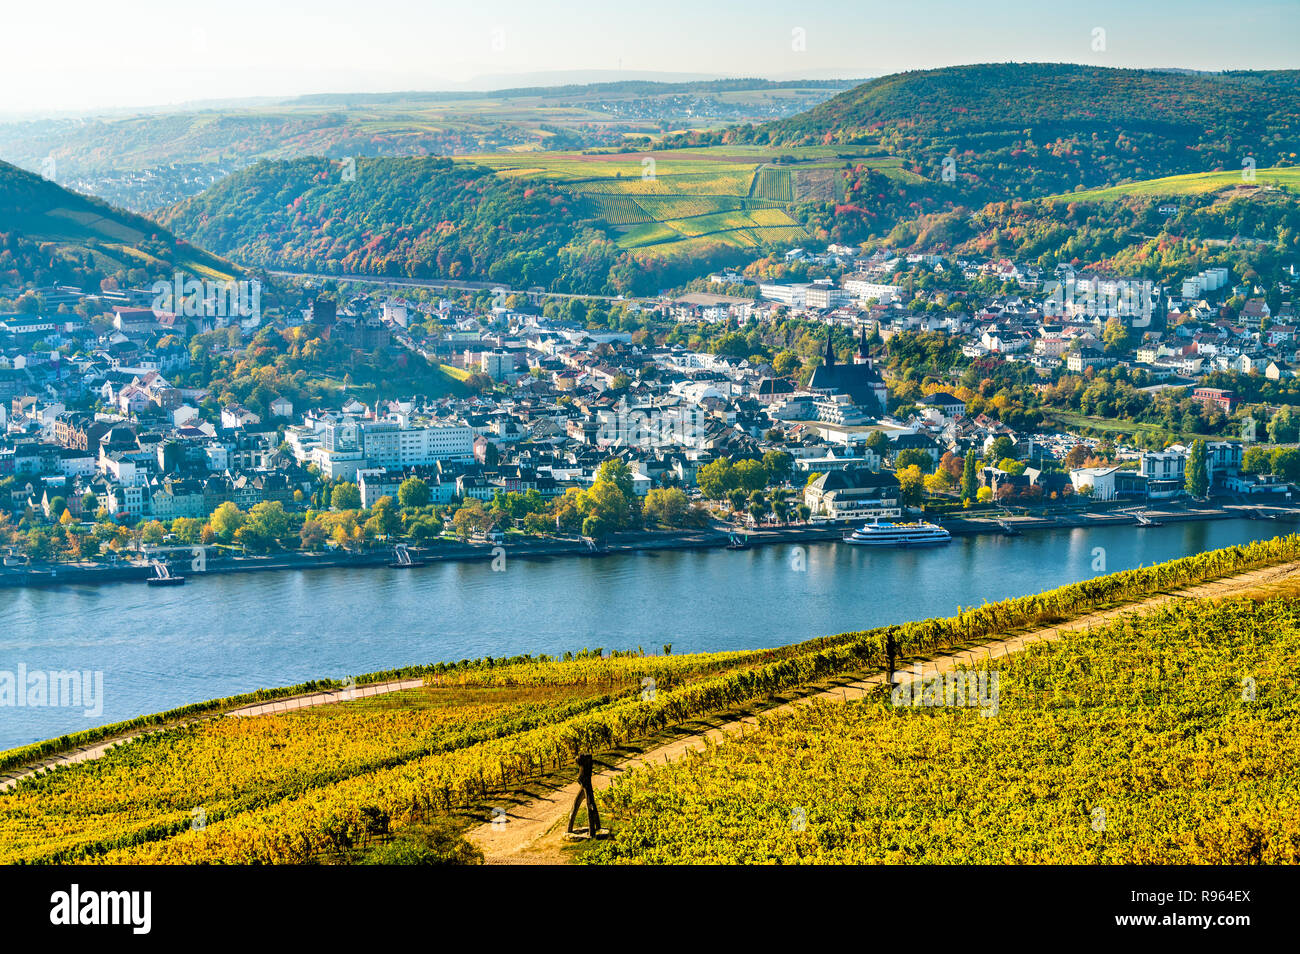 View of Bingen am Rhein from Rudesheim vineyards in the Rhine Valley, Germany Stock Photo